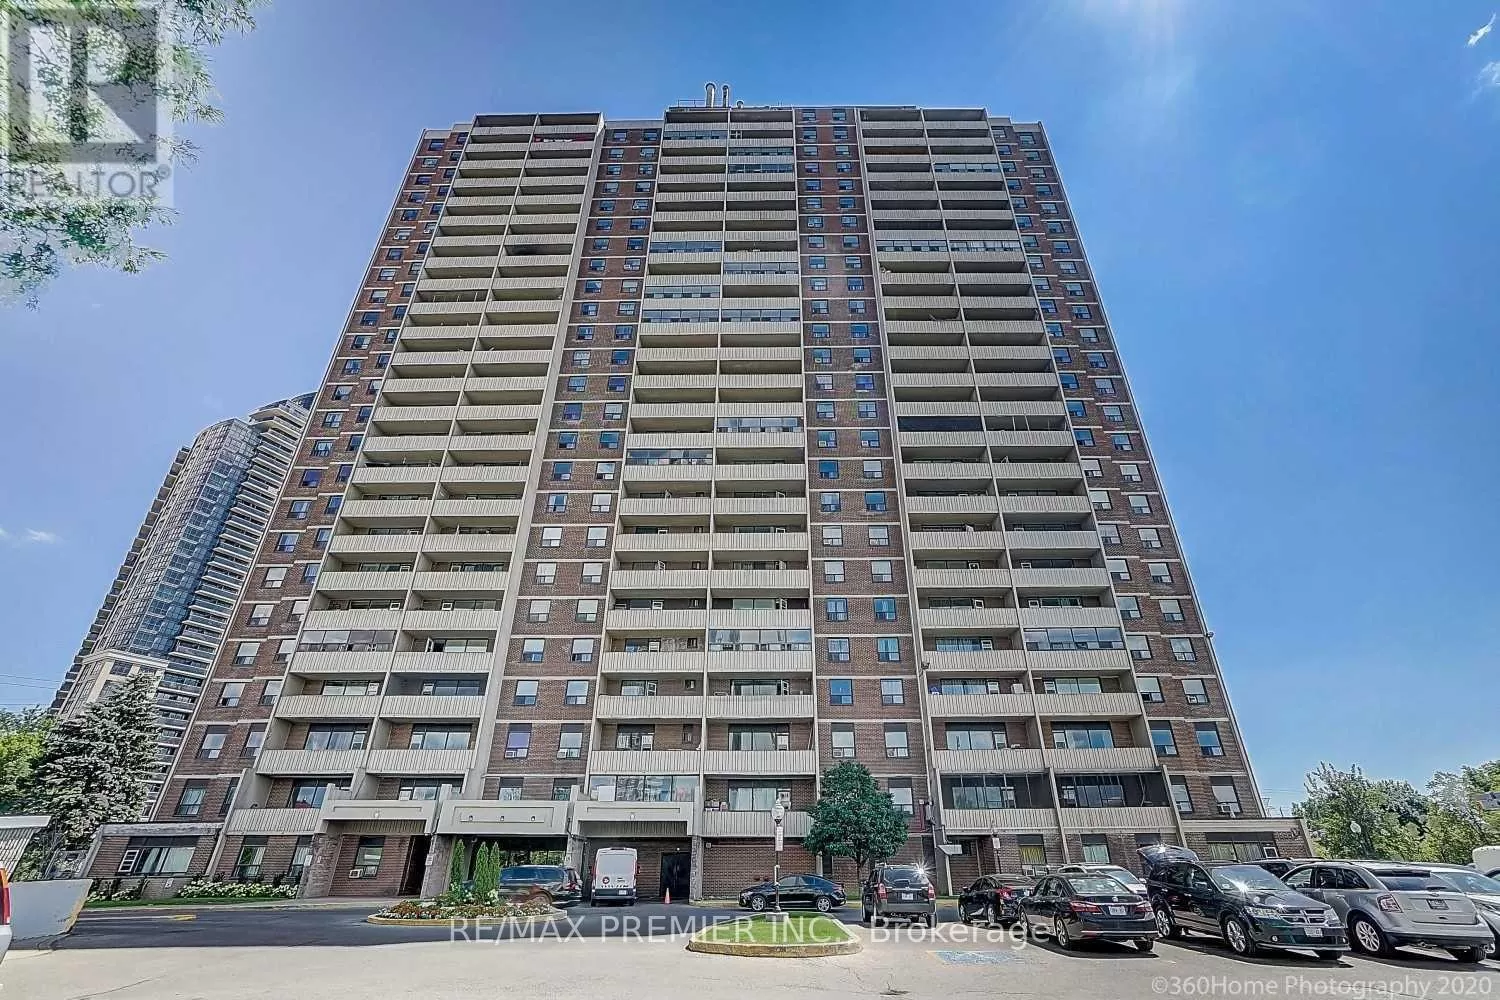 Apartment for rent: 203 - 3390 Weston Road, Toronto, Ontario M9M 2X3